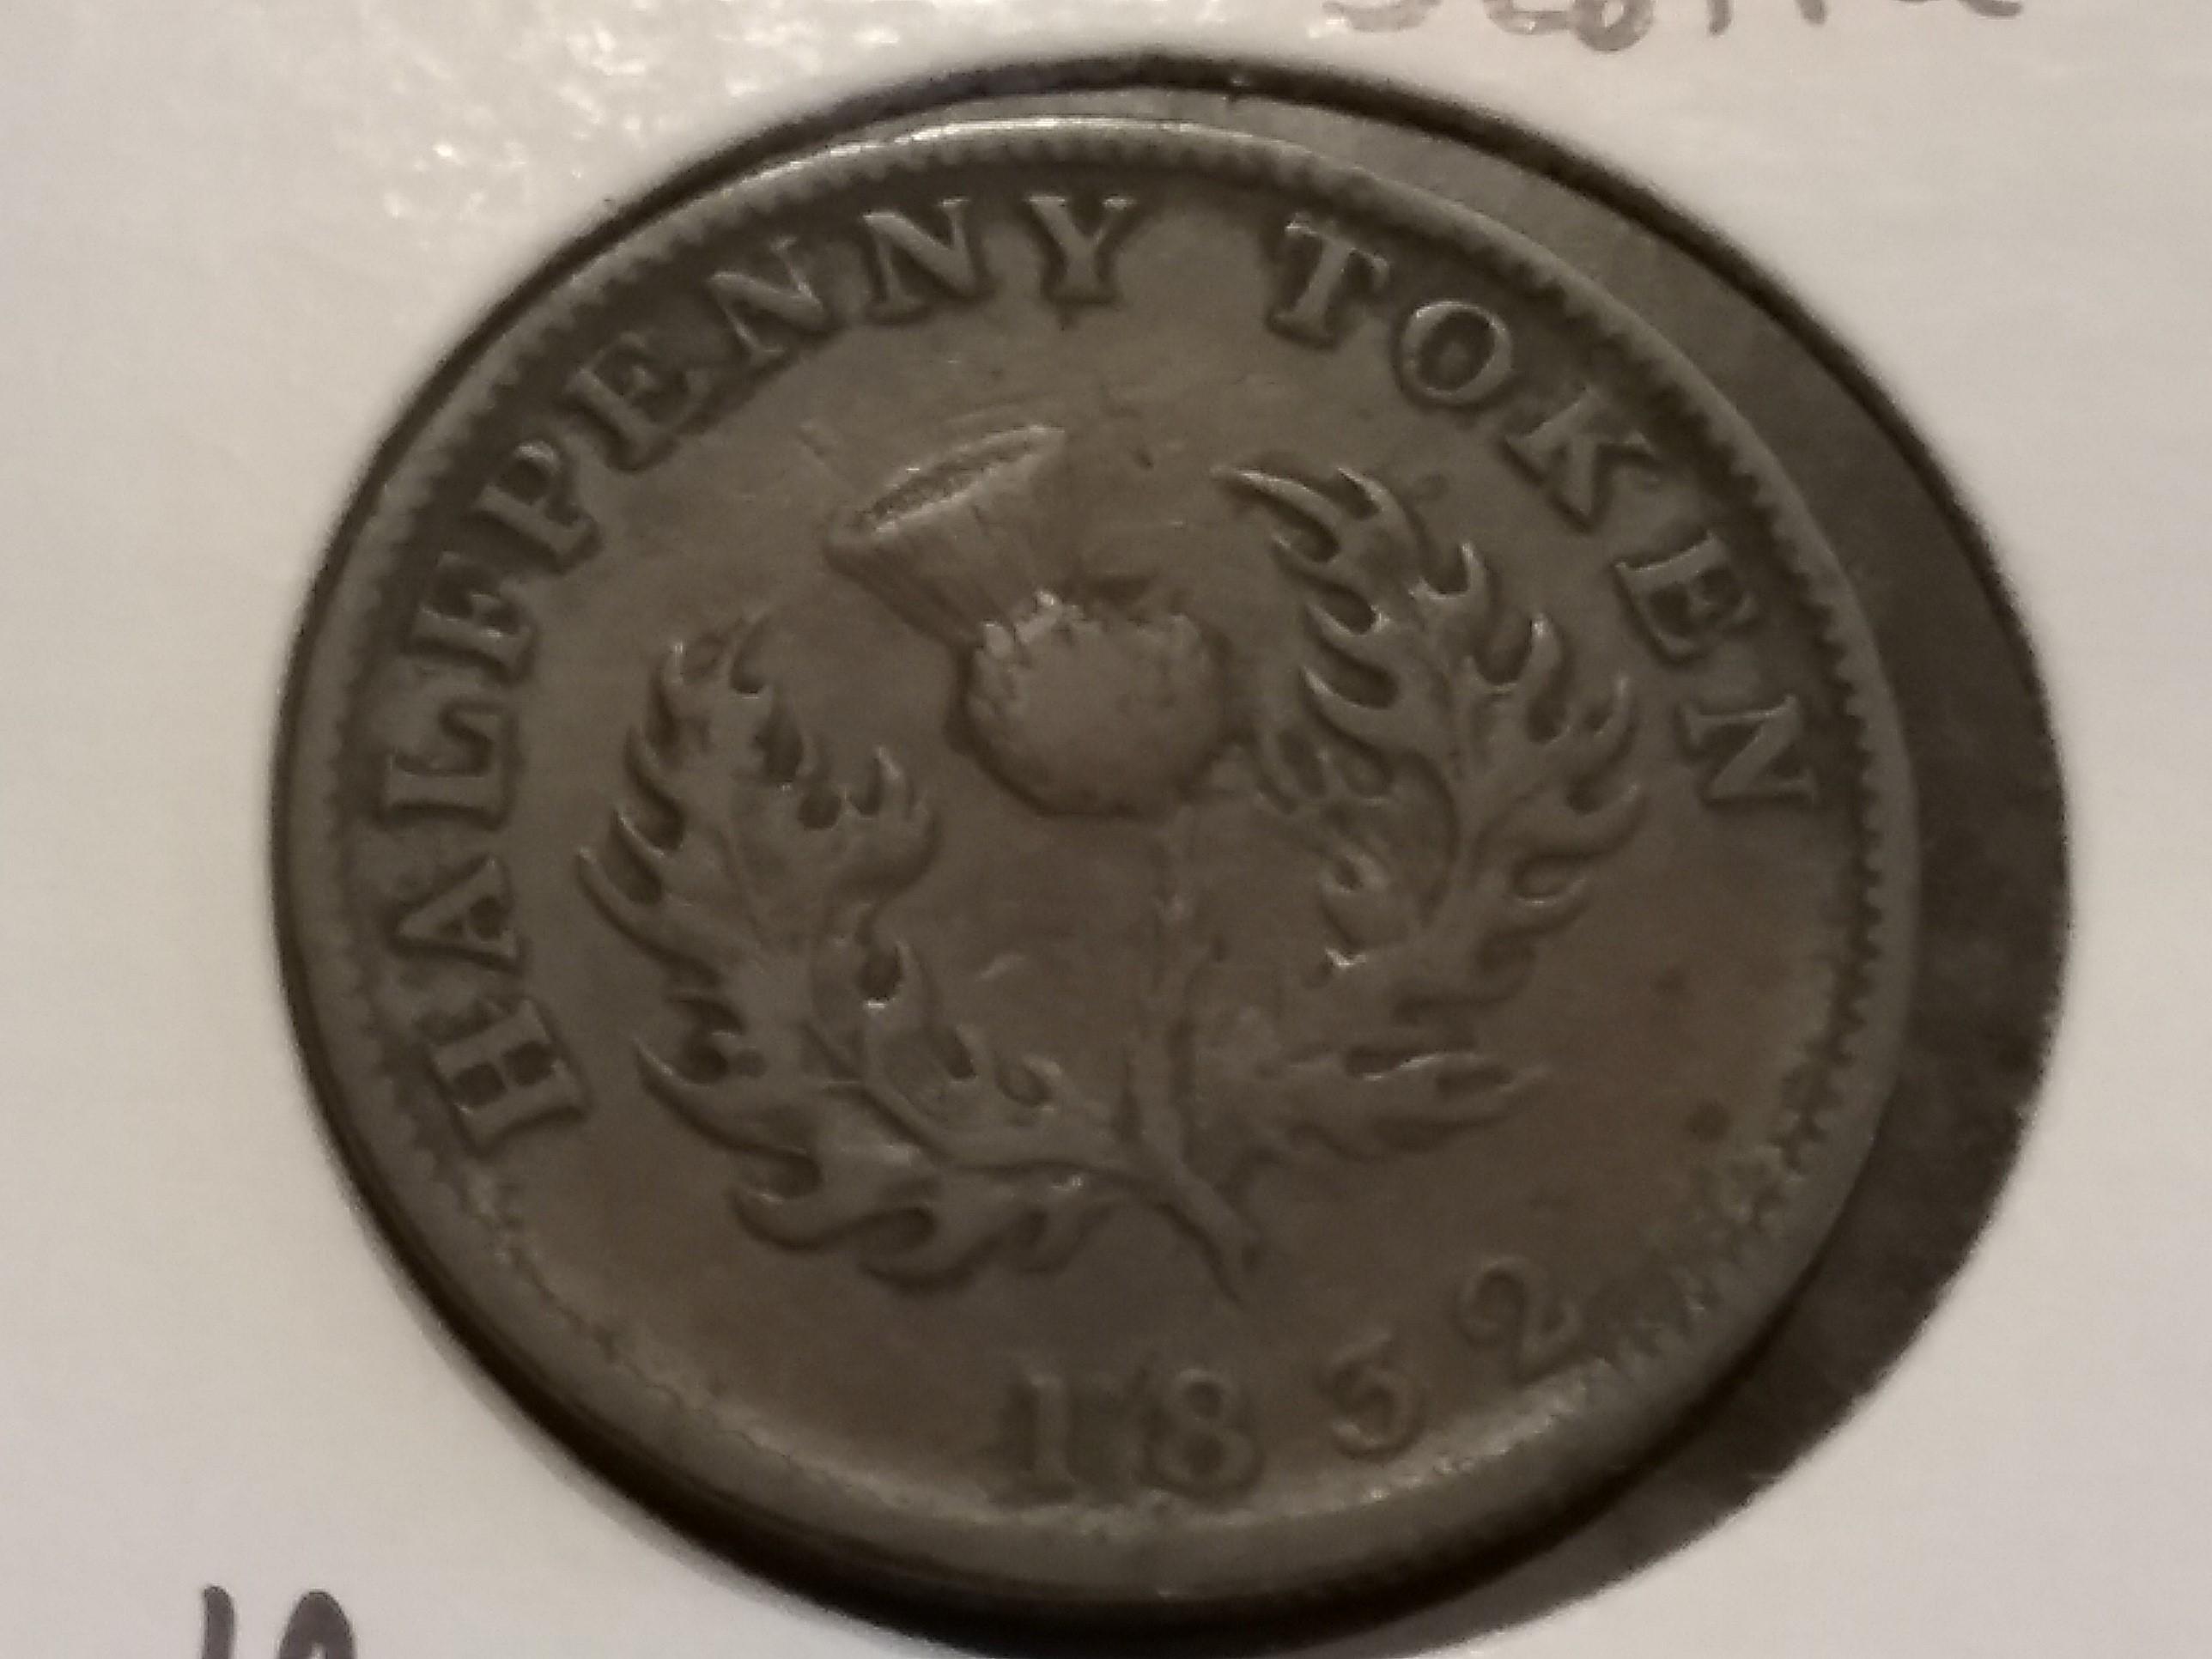 Scarce 1832 Canada Nova Scotia Half-penny